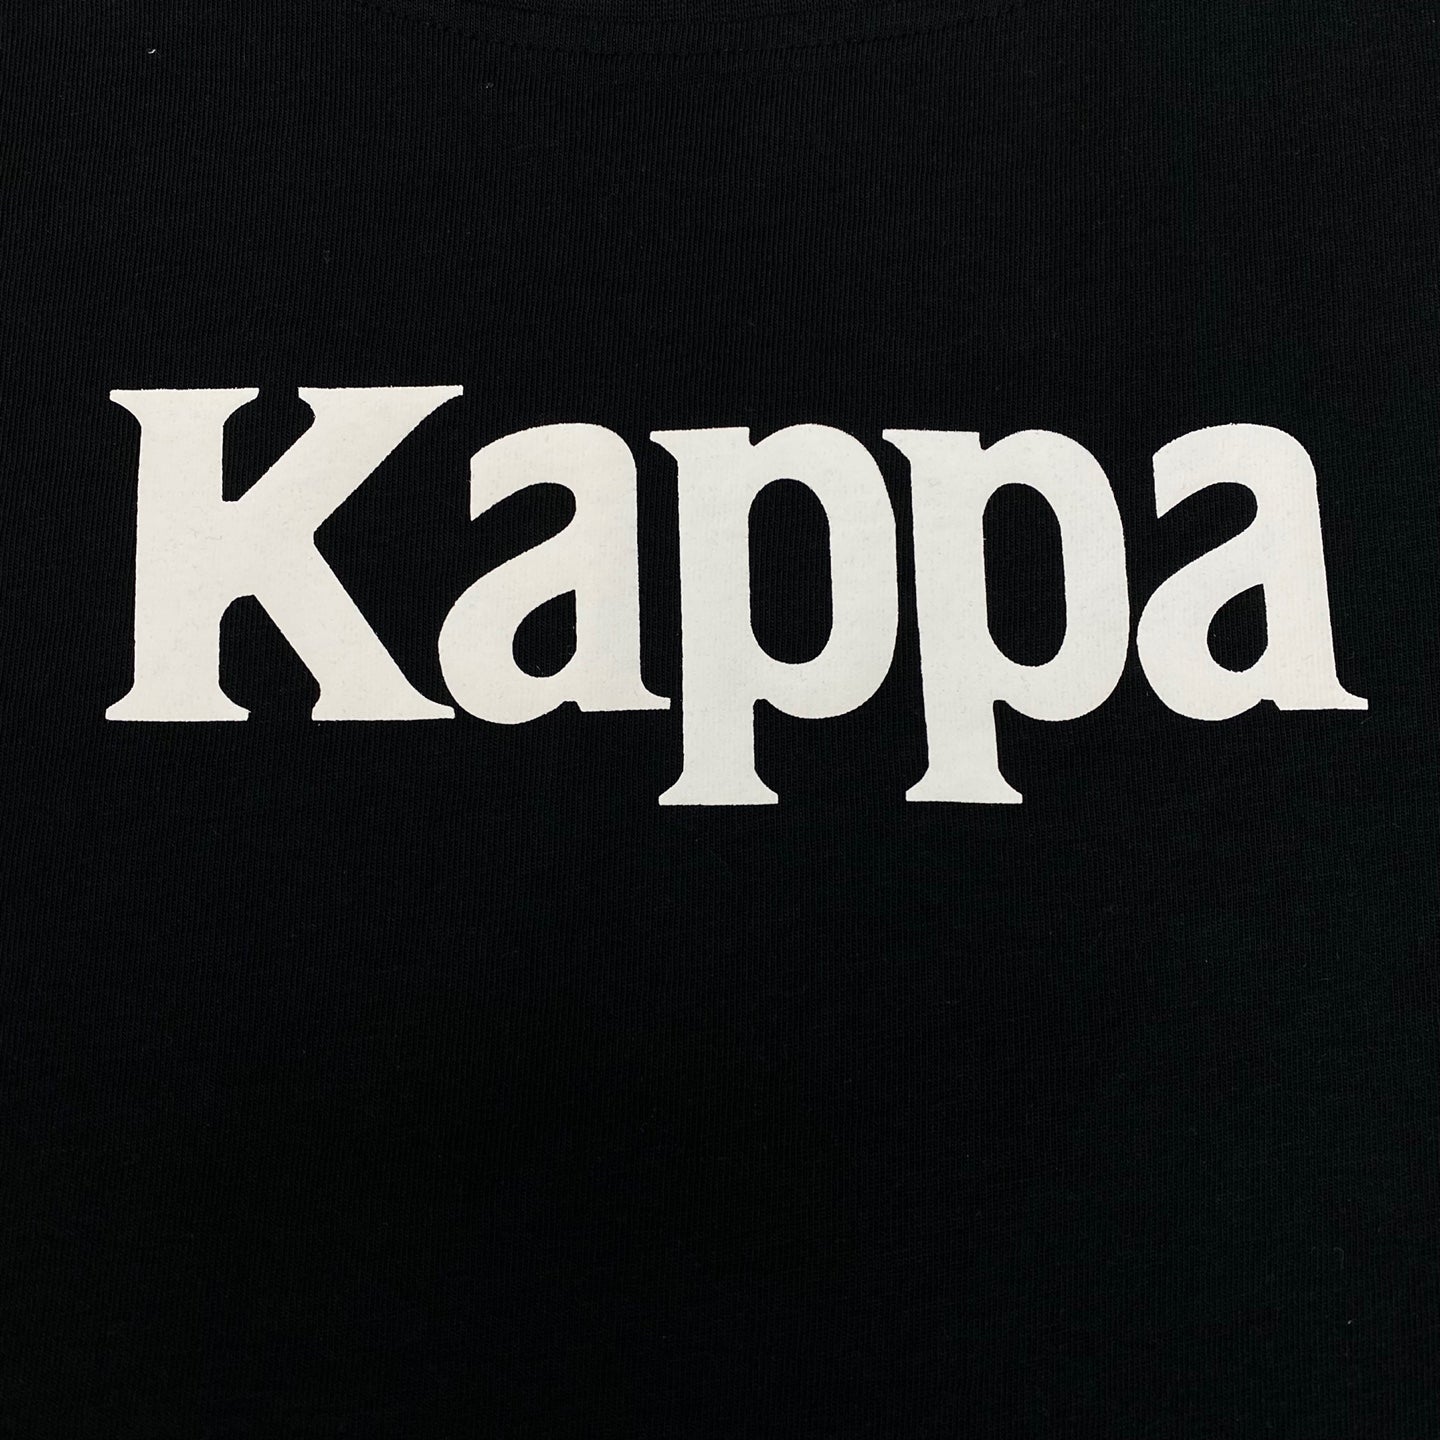 KAPPA Authentic Amilk T-Shirt - Black